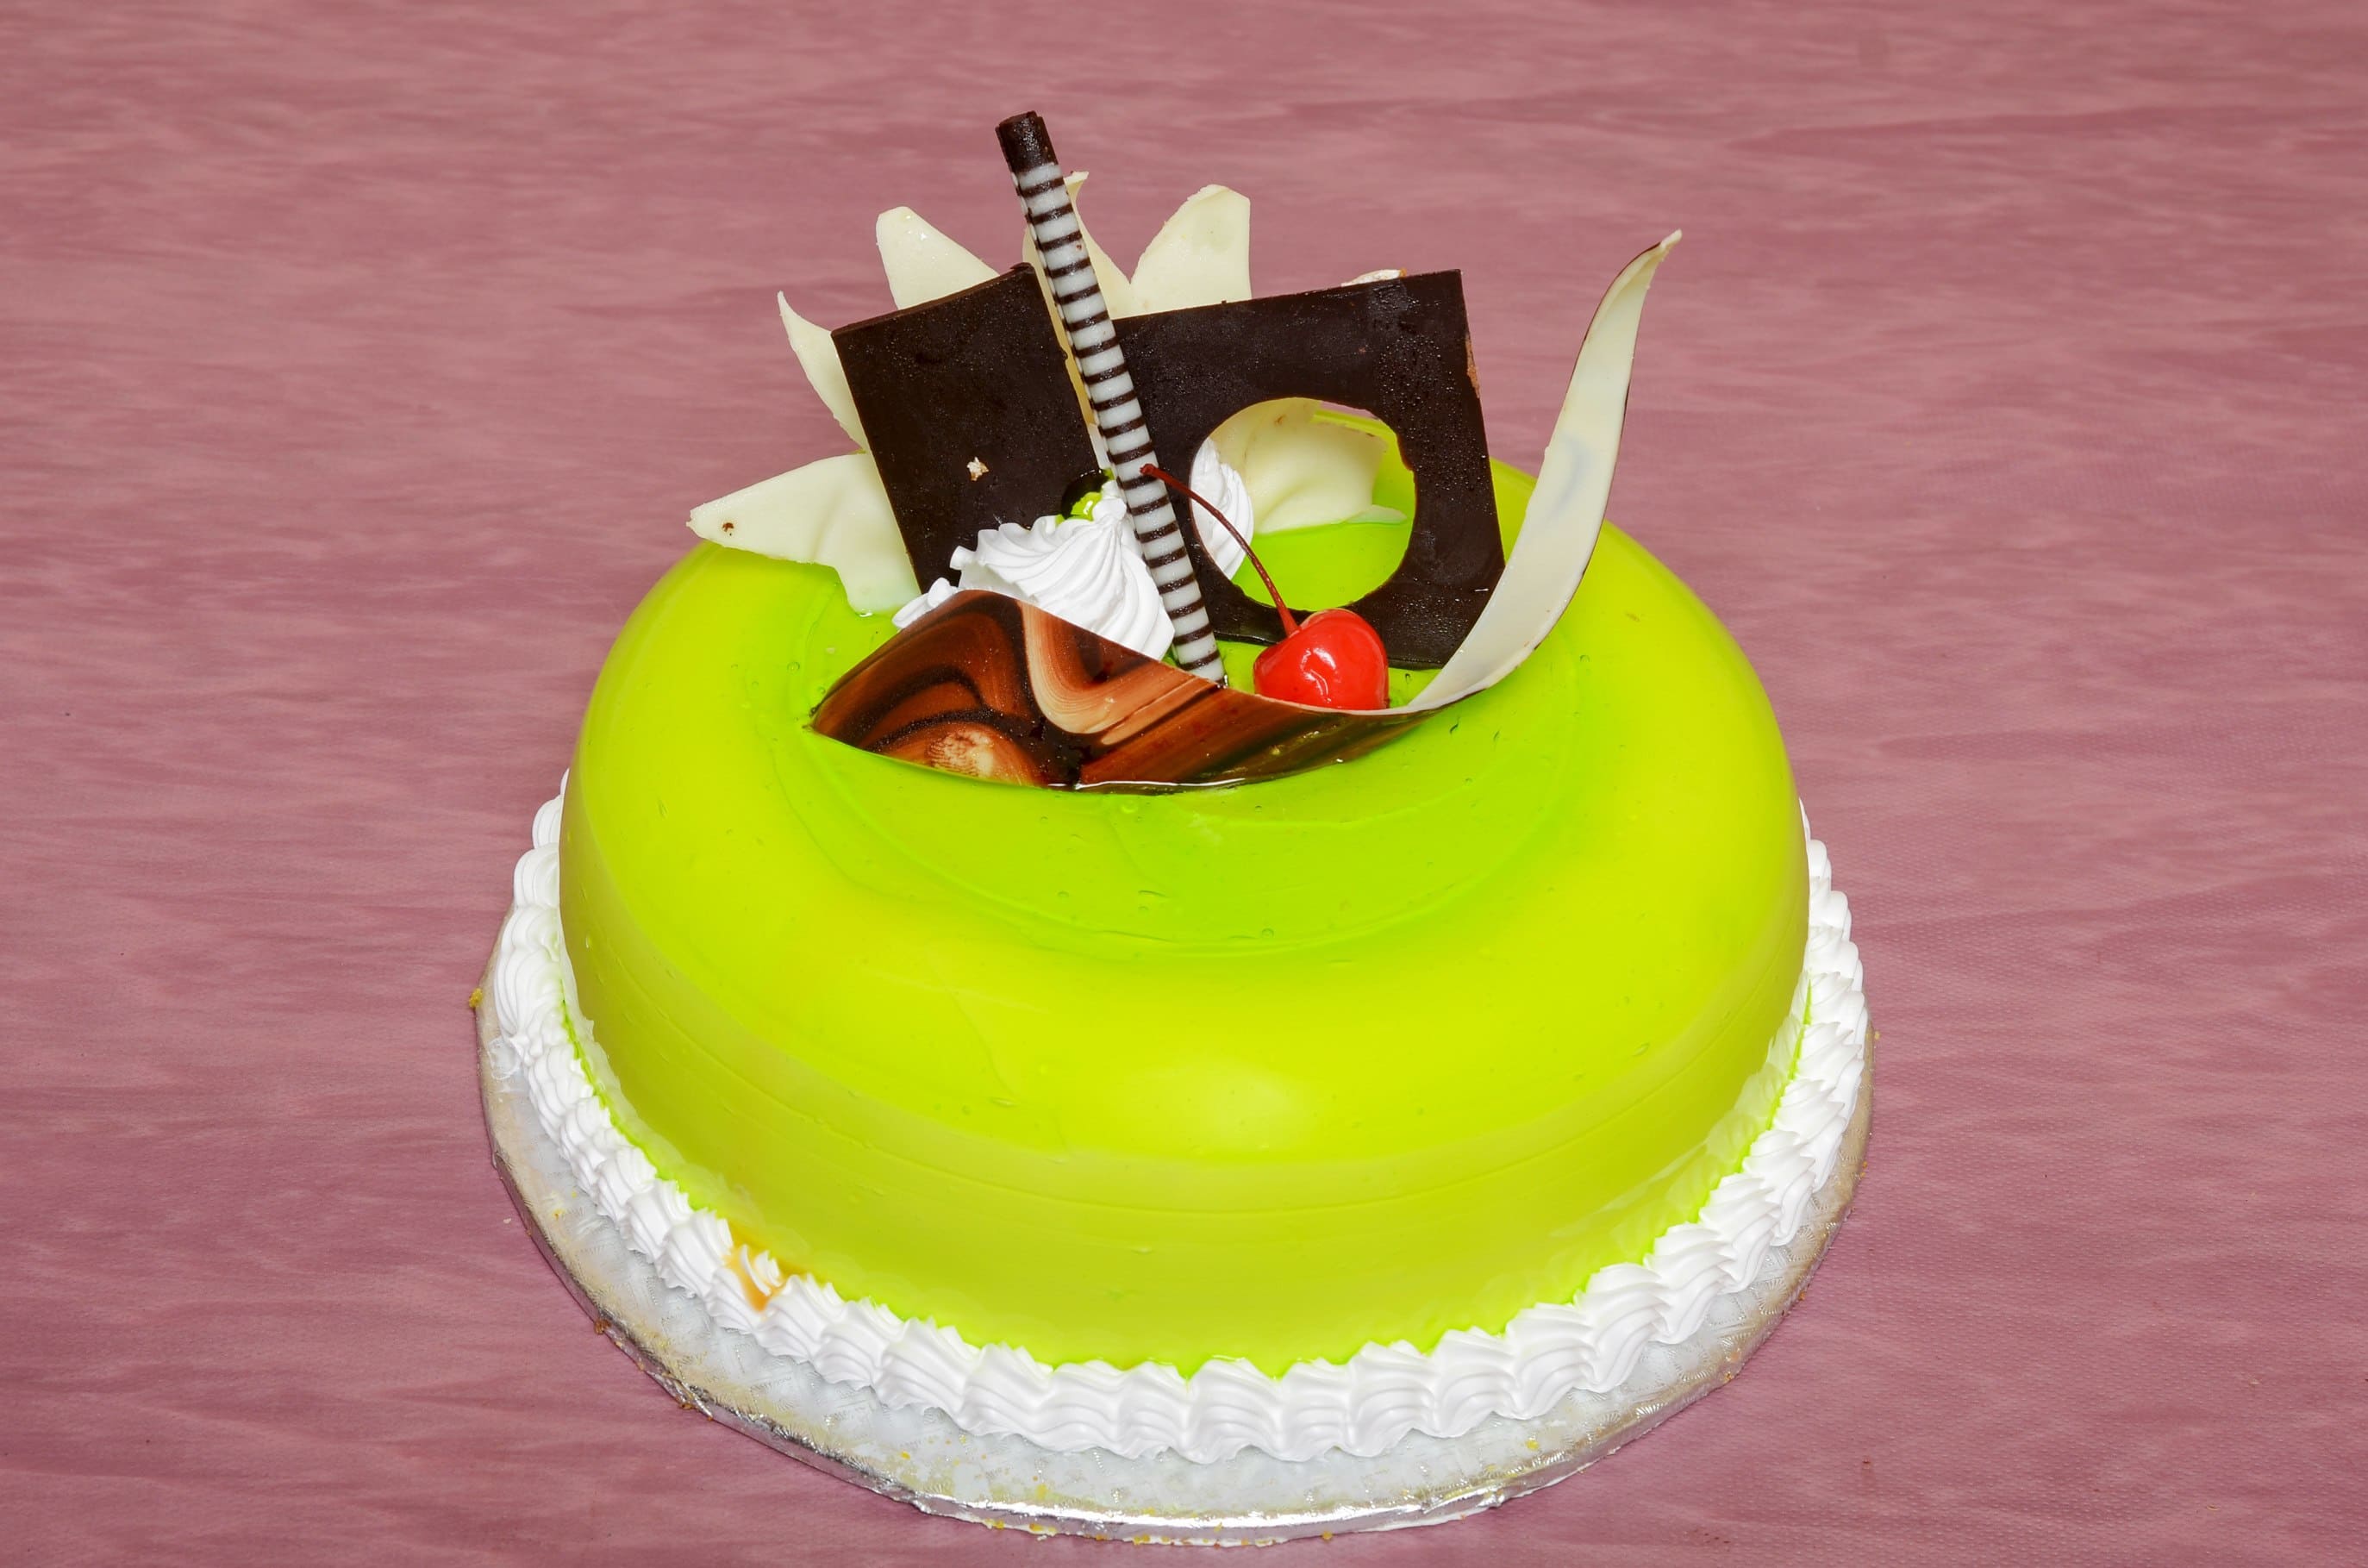 Cakes N Craft The Cake Shop Maninagar Jawahar Chowk in Maninagar,Ahmedabad  - Best Cake Shops in Ahmedabad - Justdial